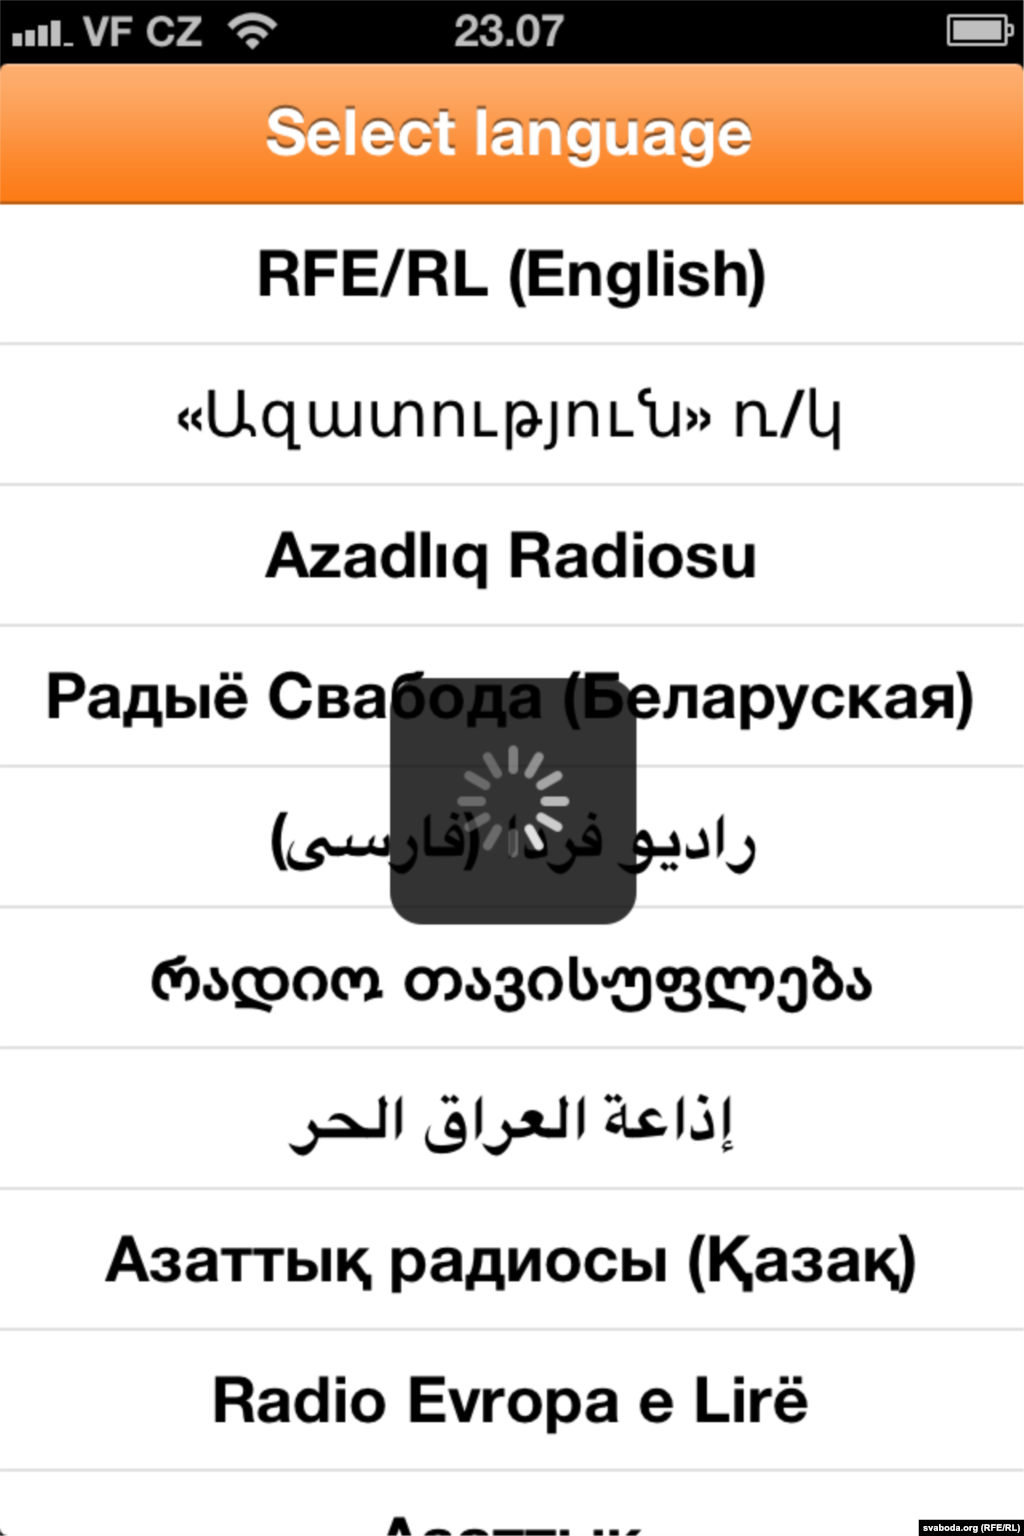 BELARUS - iOS application Radio Svaboda Belarus